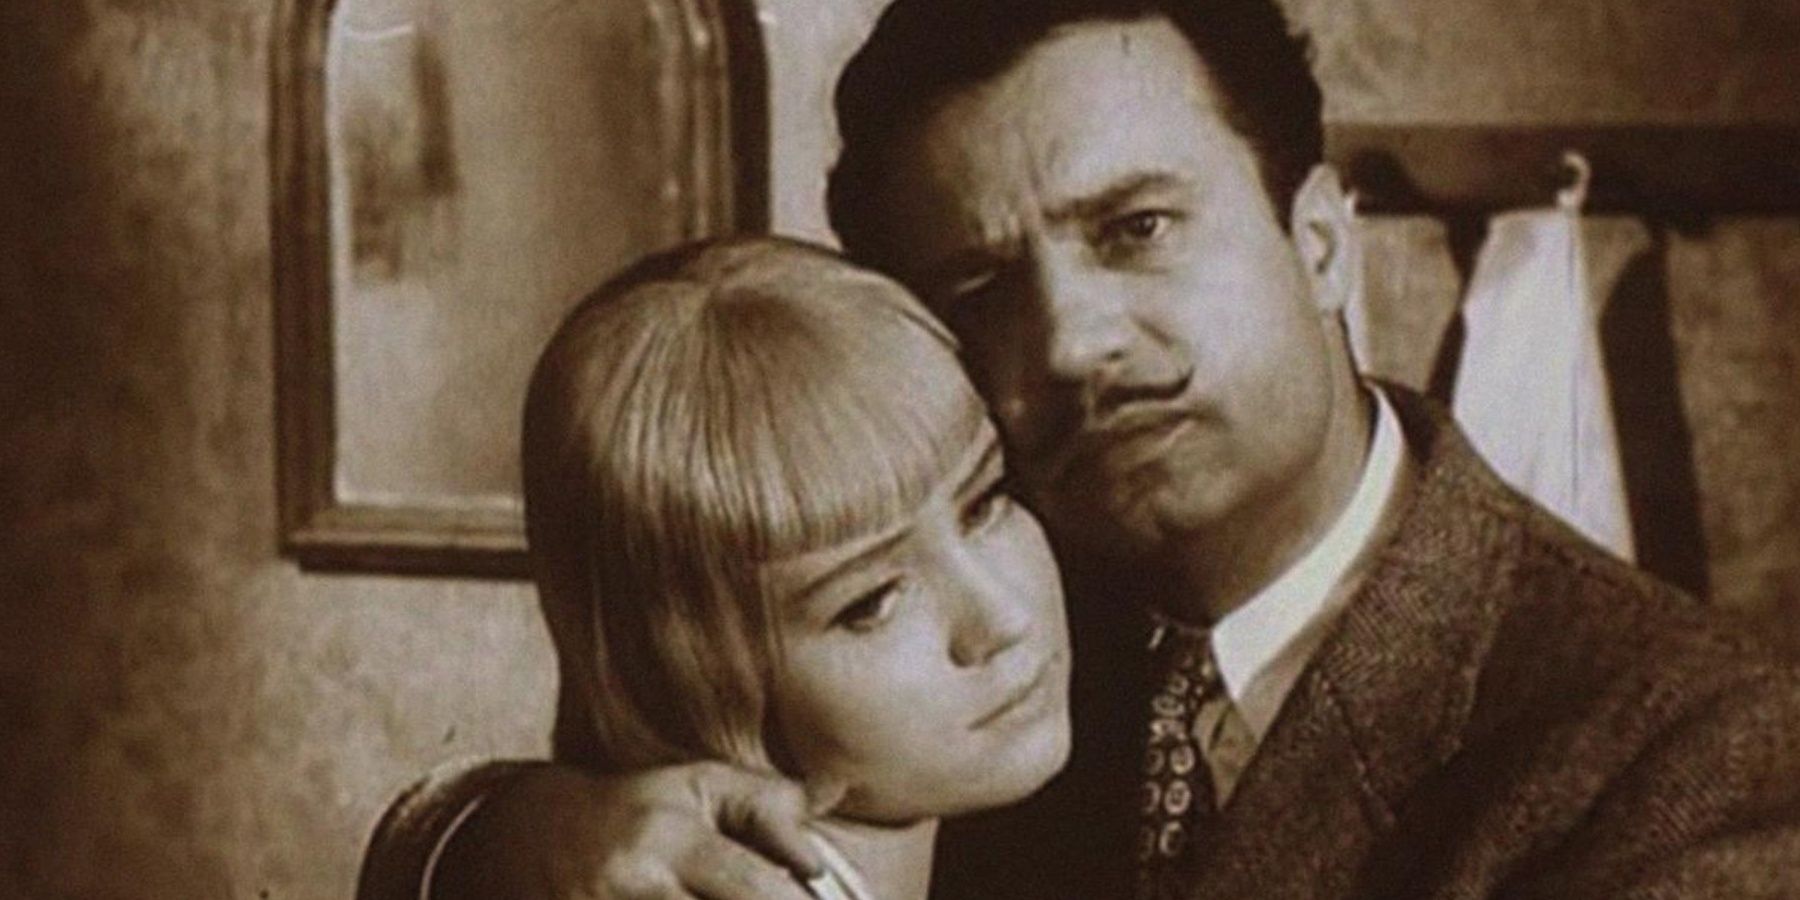 Black and white still image of Vladimir Mensik and Jaroslava Obermalerova hugging in Happy End